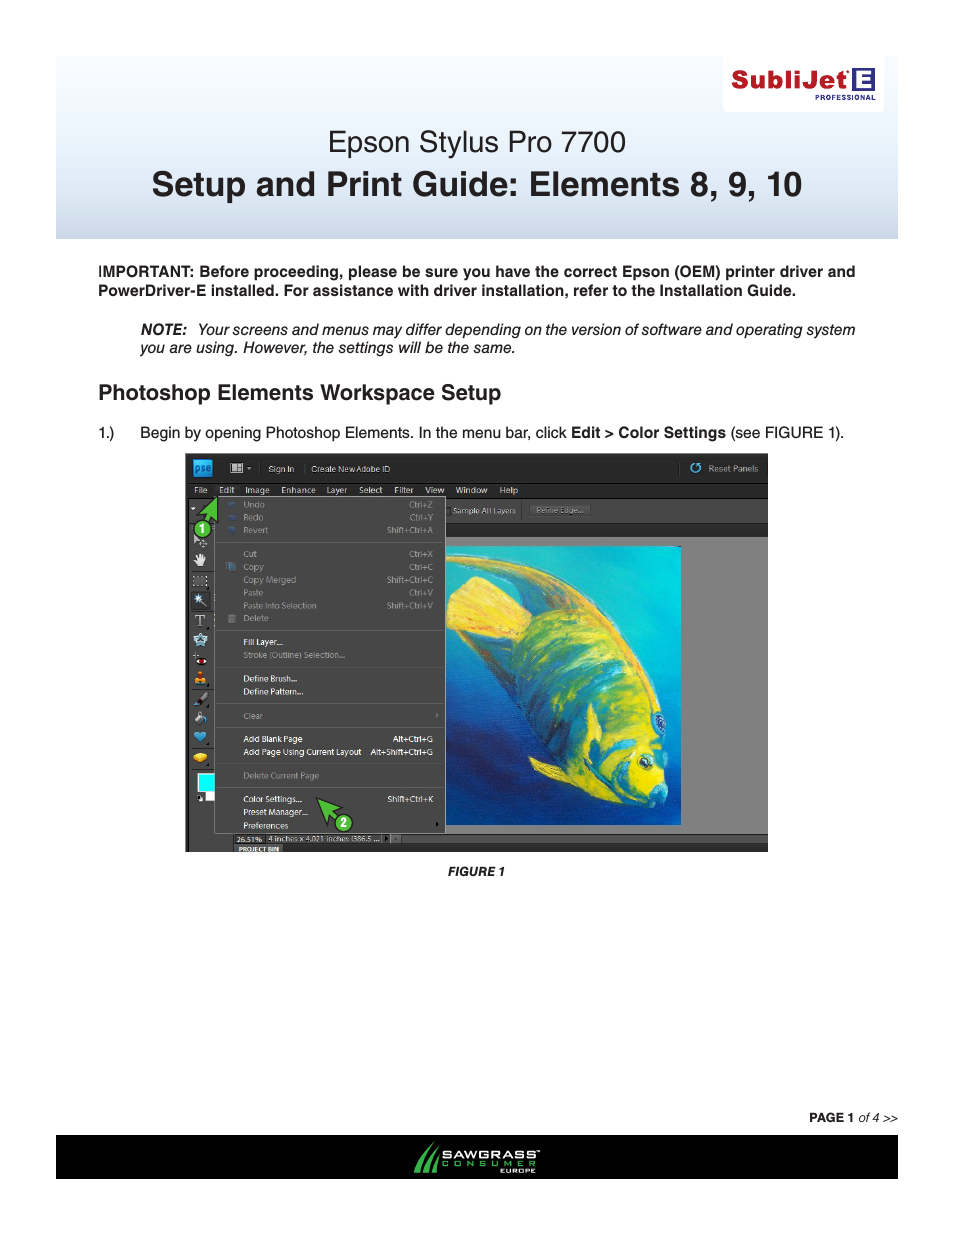 SubliJet E Epson Stylus Pro 7700 (Windows Power Driver Setup): Print & Setup Guide Photoshop Elements 8 - 10